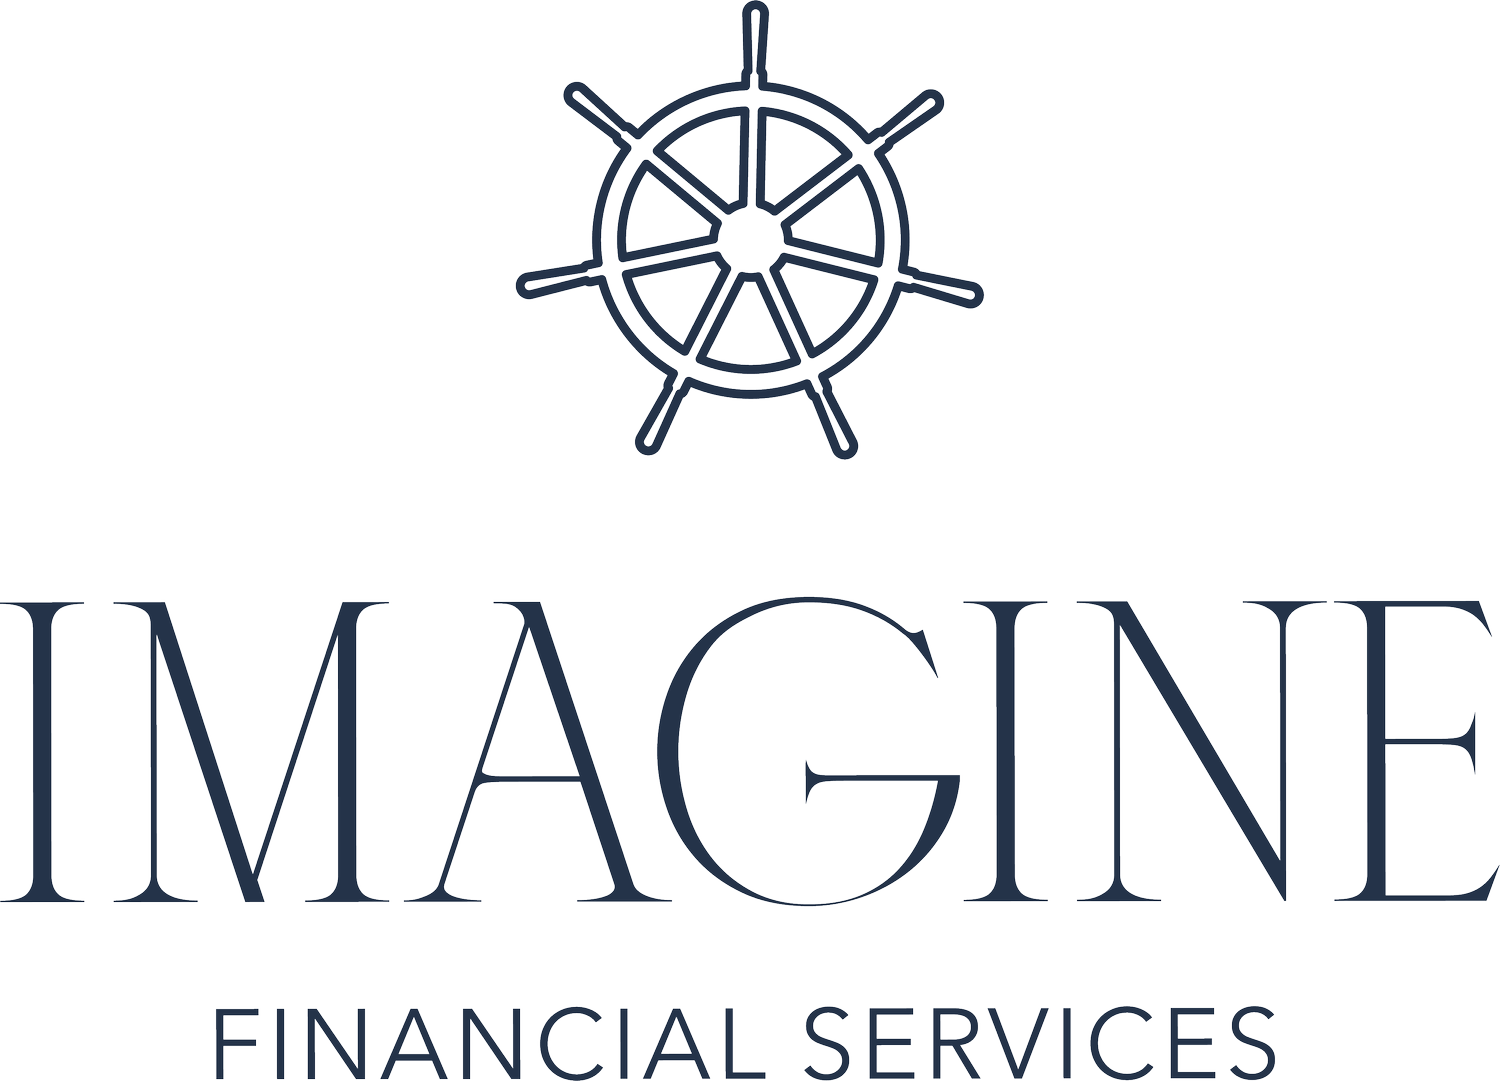 Imagine Financial Services - Marianne Nolte - Certified Financial Planner